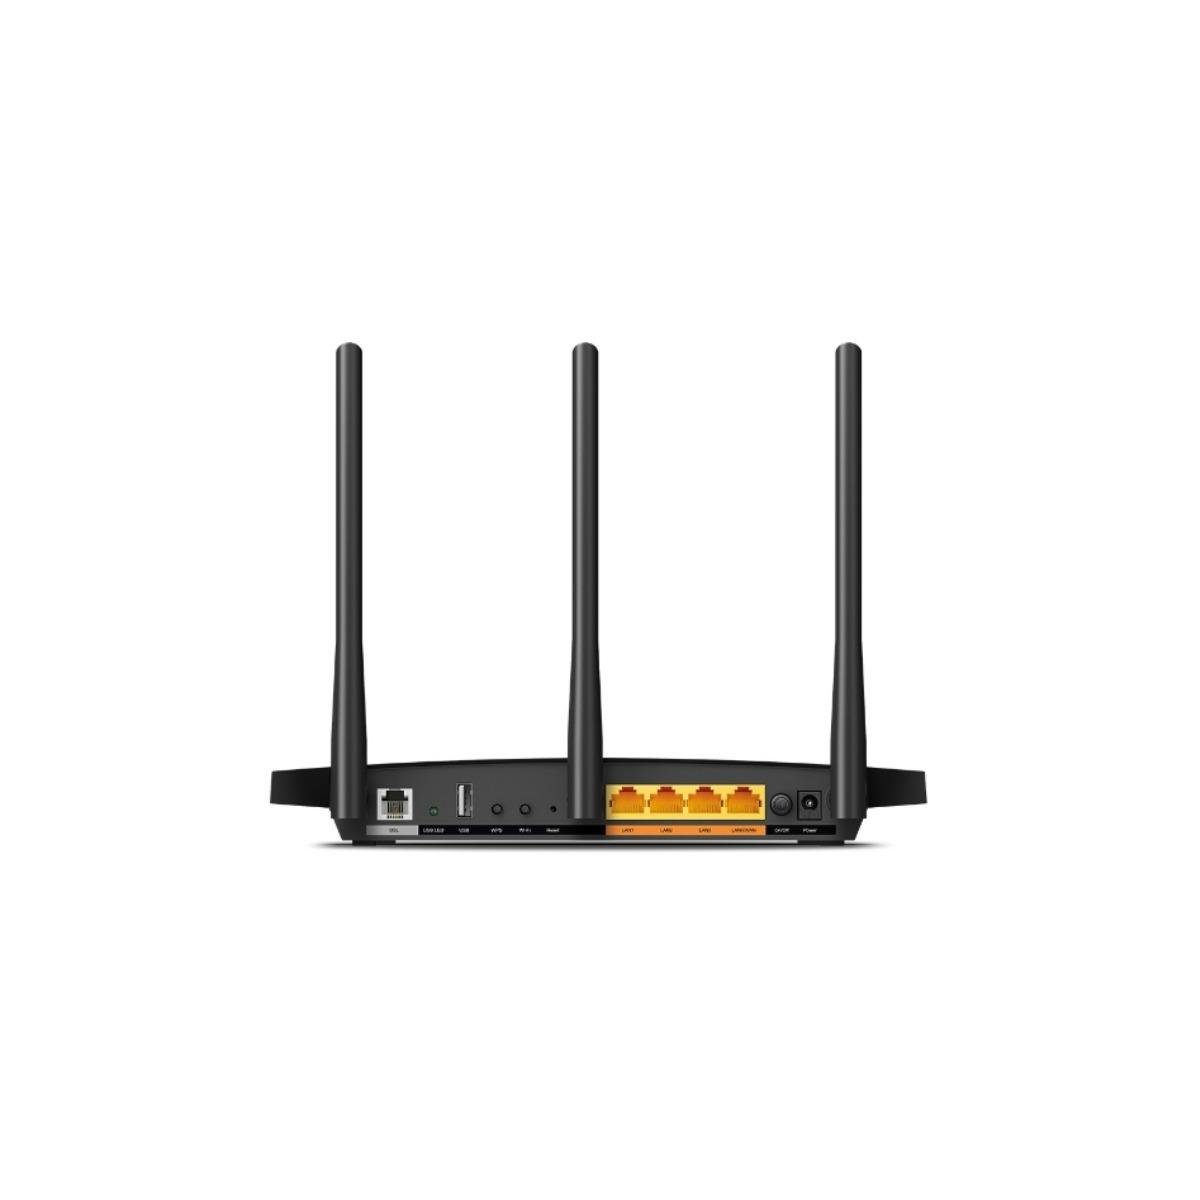 Netzwerk-Switch VDSL/ADSL ARCHER AC1200 Router - TP-Link Modem VR400 Wireless